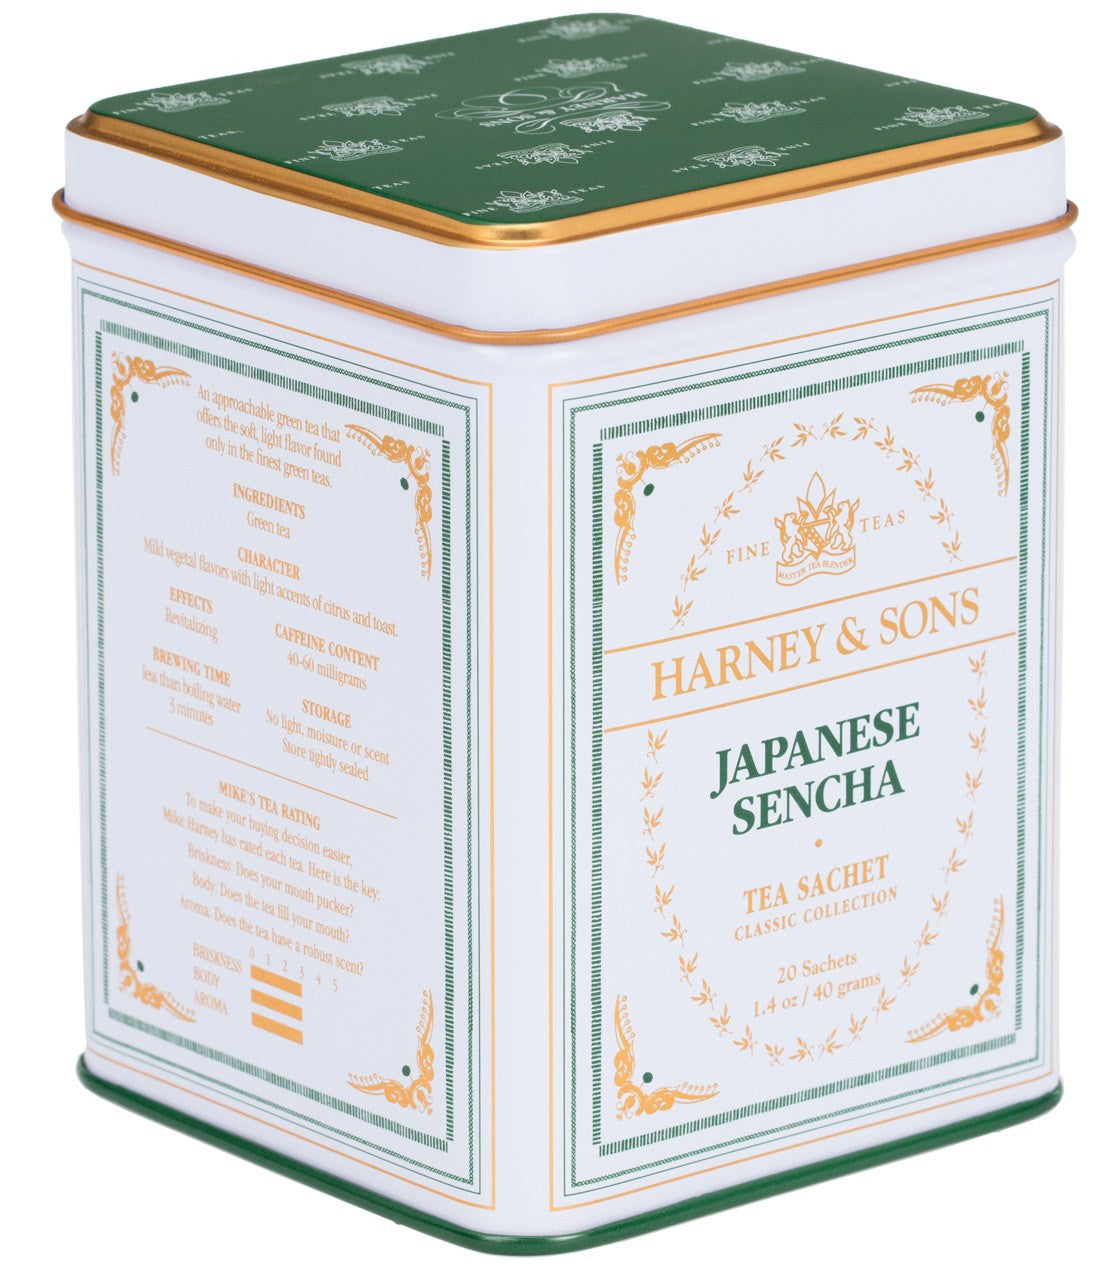 Japanese Sencha, Classic Tin of 20 Sachets - Sachets Single Classic Tin of 20 Sachets - Harney & Sons Fine Teas